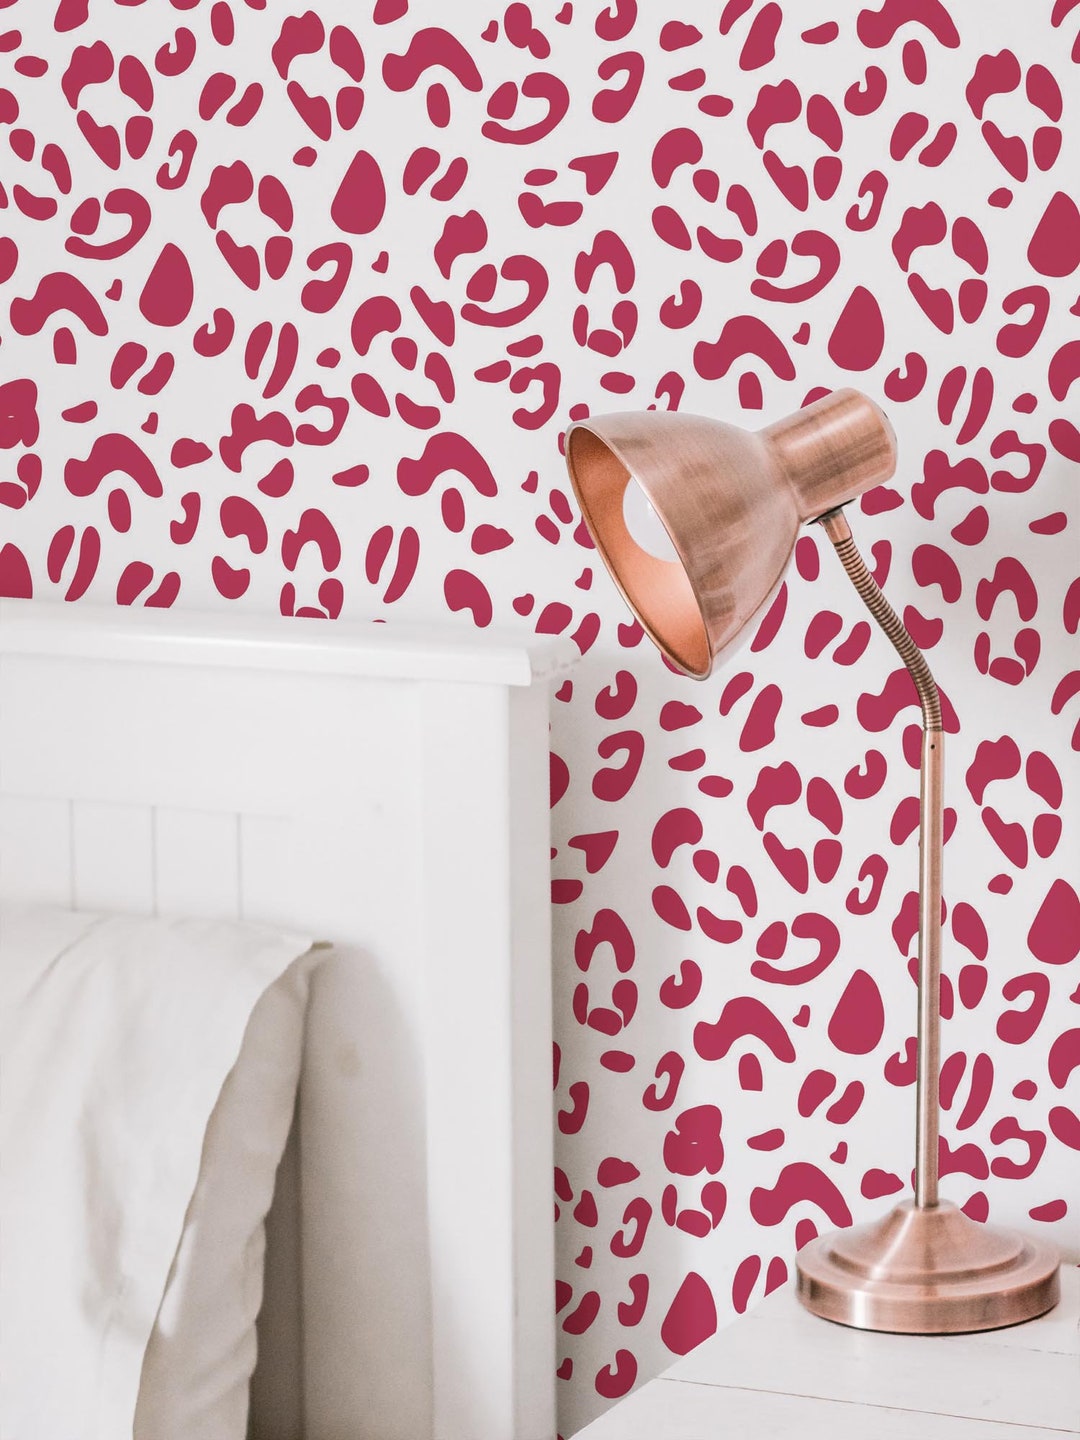 eopard Spring Nordic Leopard Print Wallpaper Self-Adhesive Bedroom